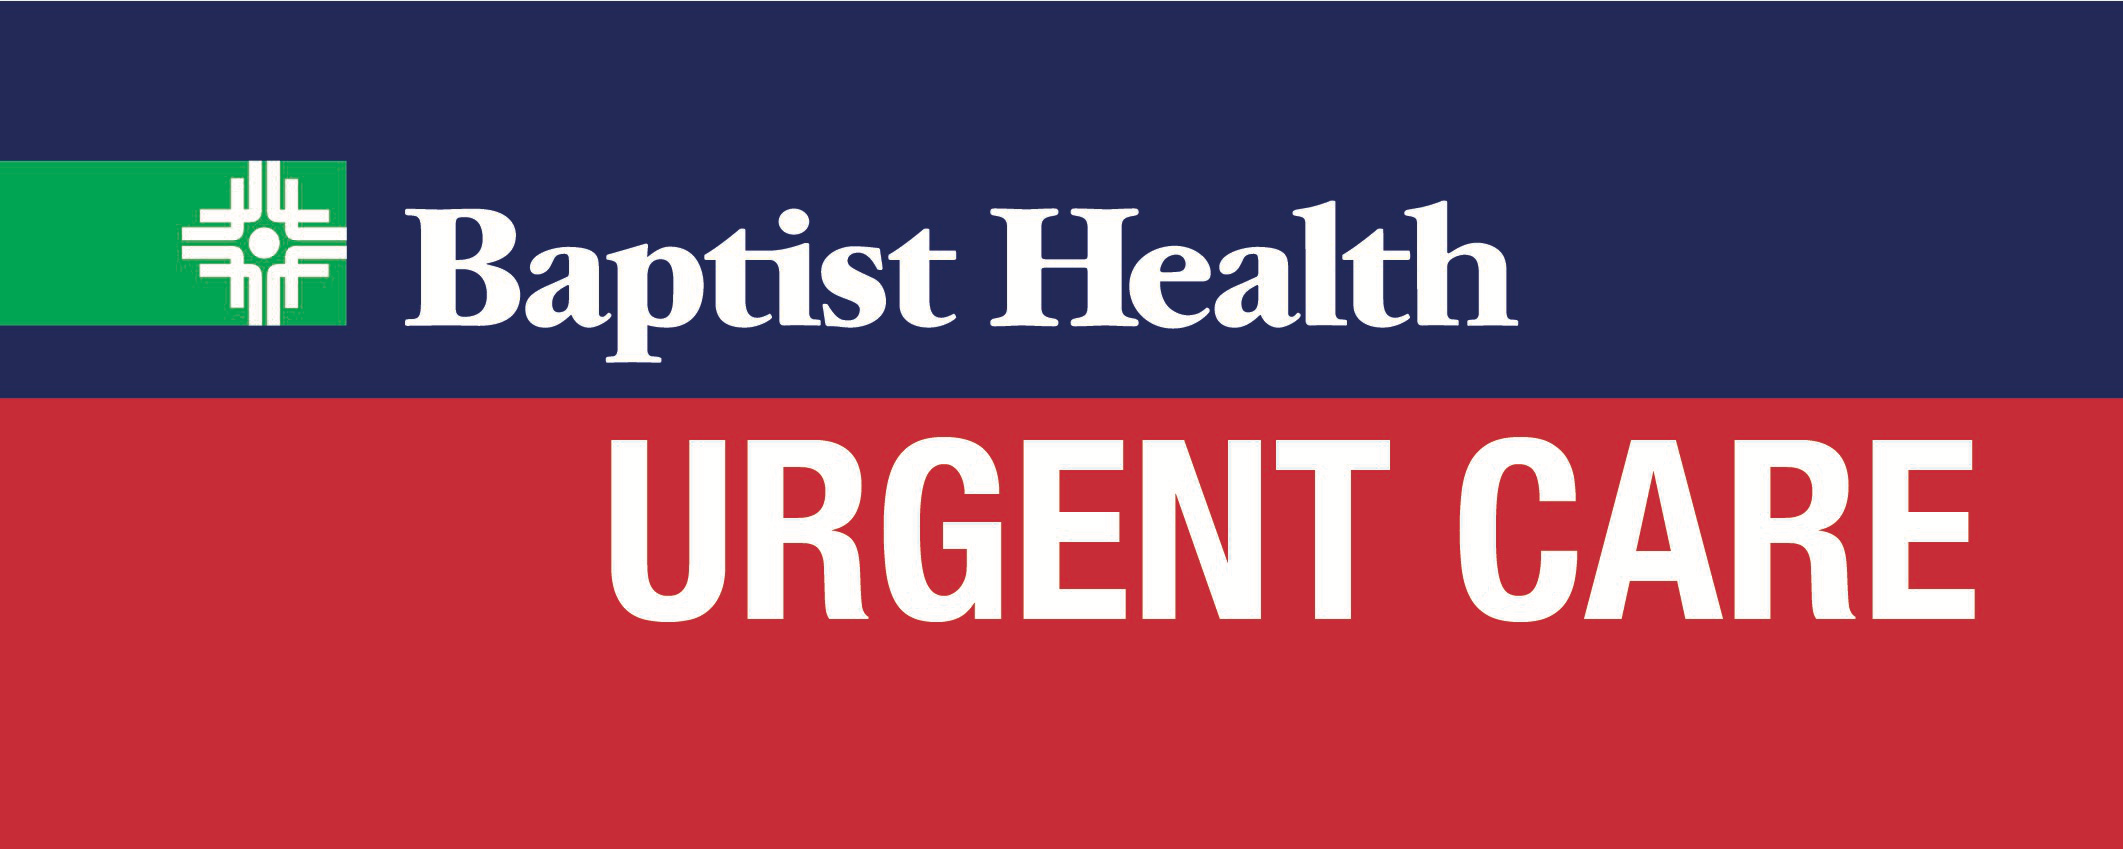 Baptist Health Urgent Care - Hot Springs Central Ave Logo